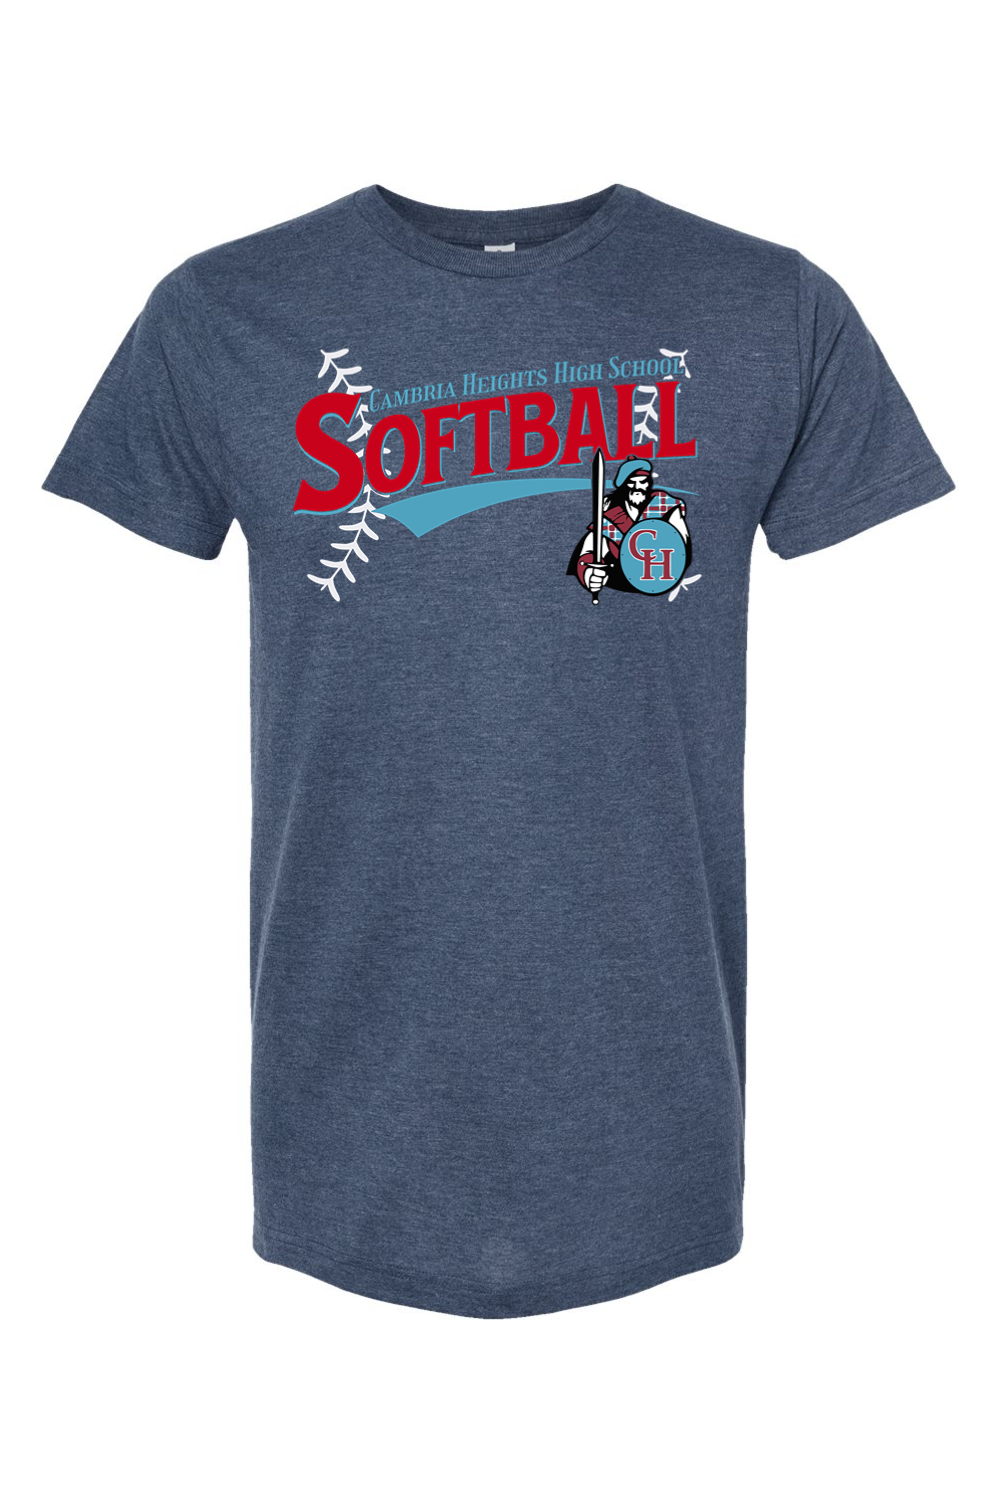 CH Softball - Swoosh - T-Shirt - Yinzylvania